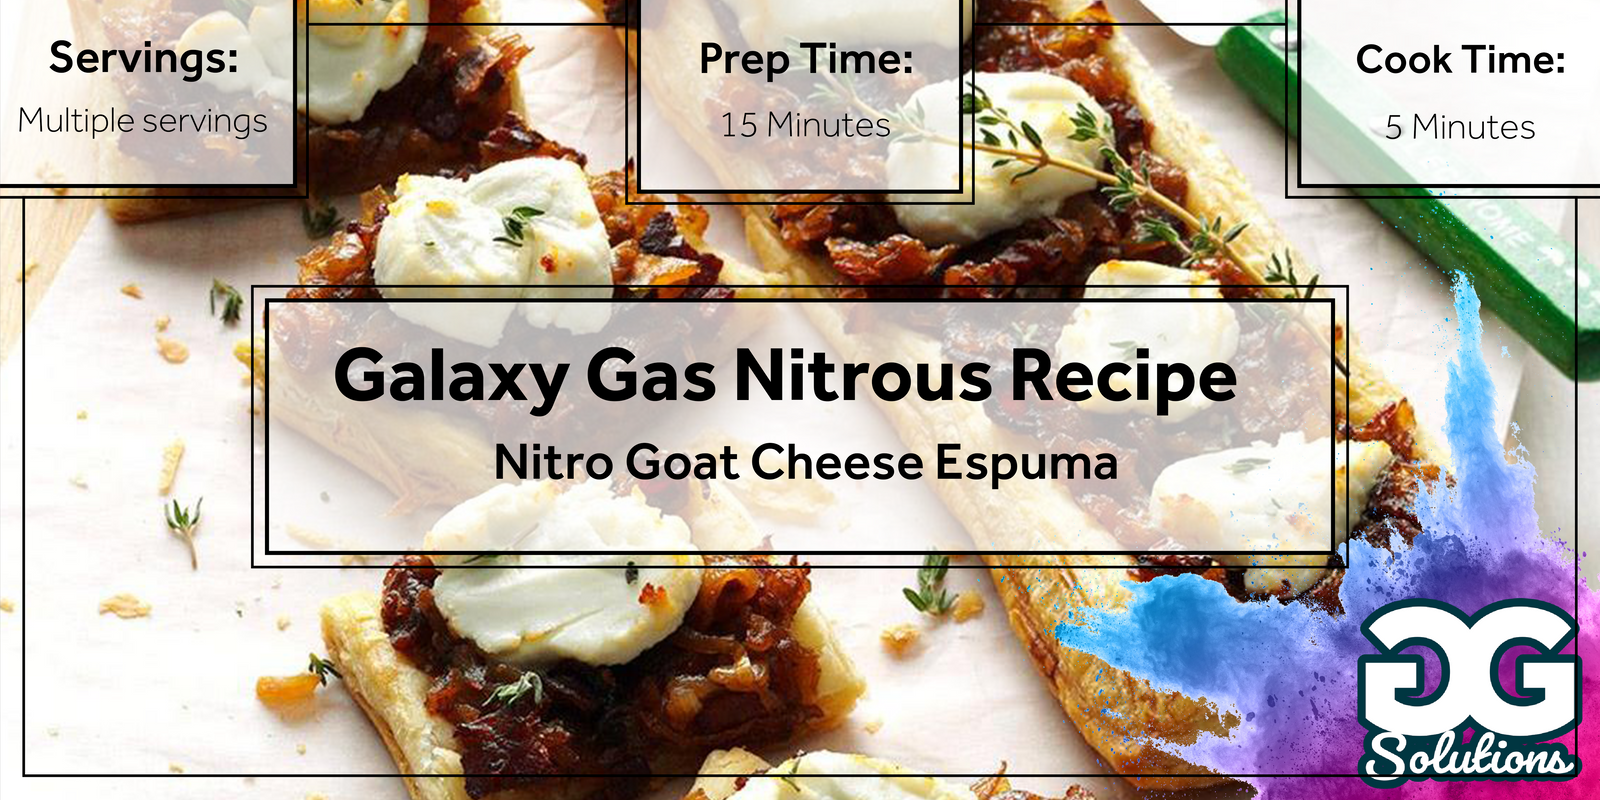 Galaxy Gas Nitrous Recipe: Nitro Goat Cheese Espuma